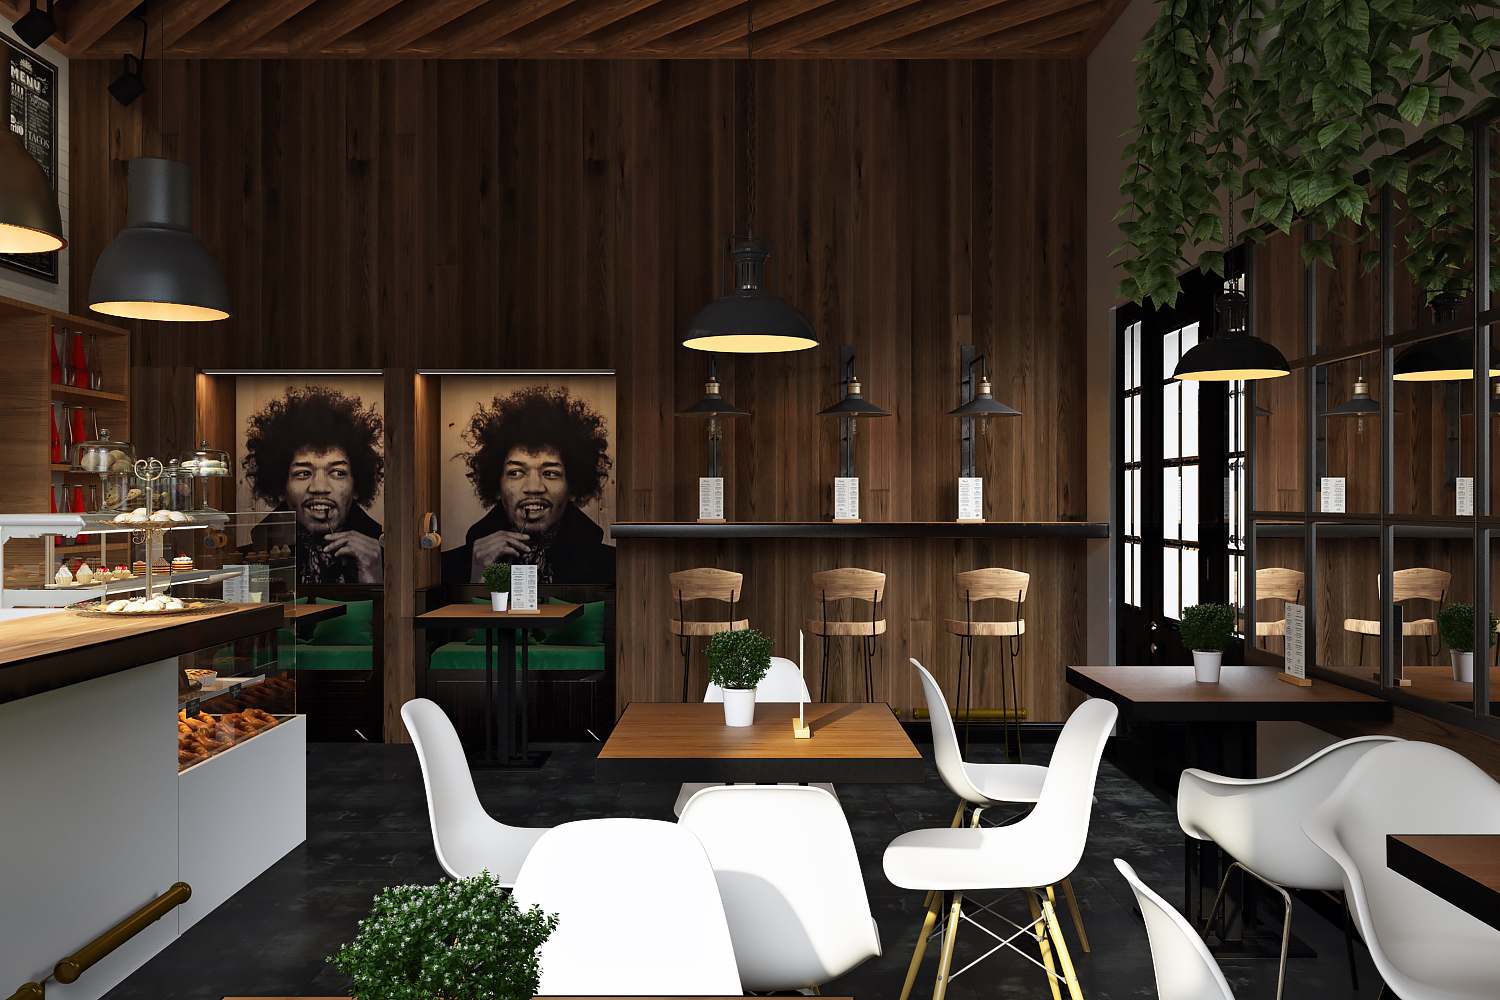 Tsoy design interior дизайн кафе